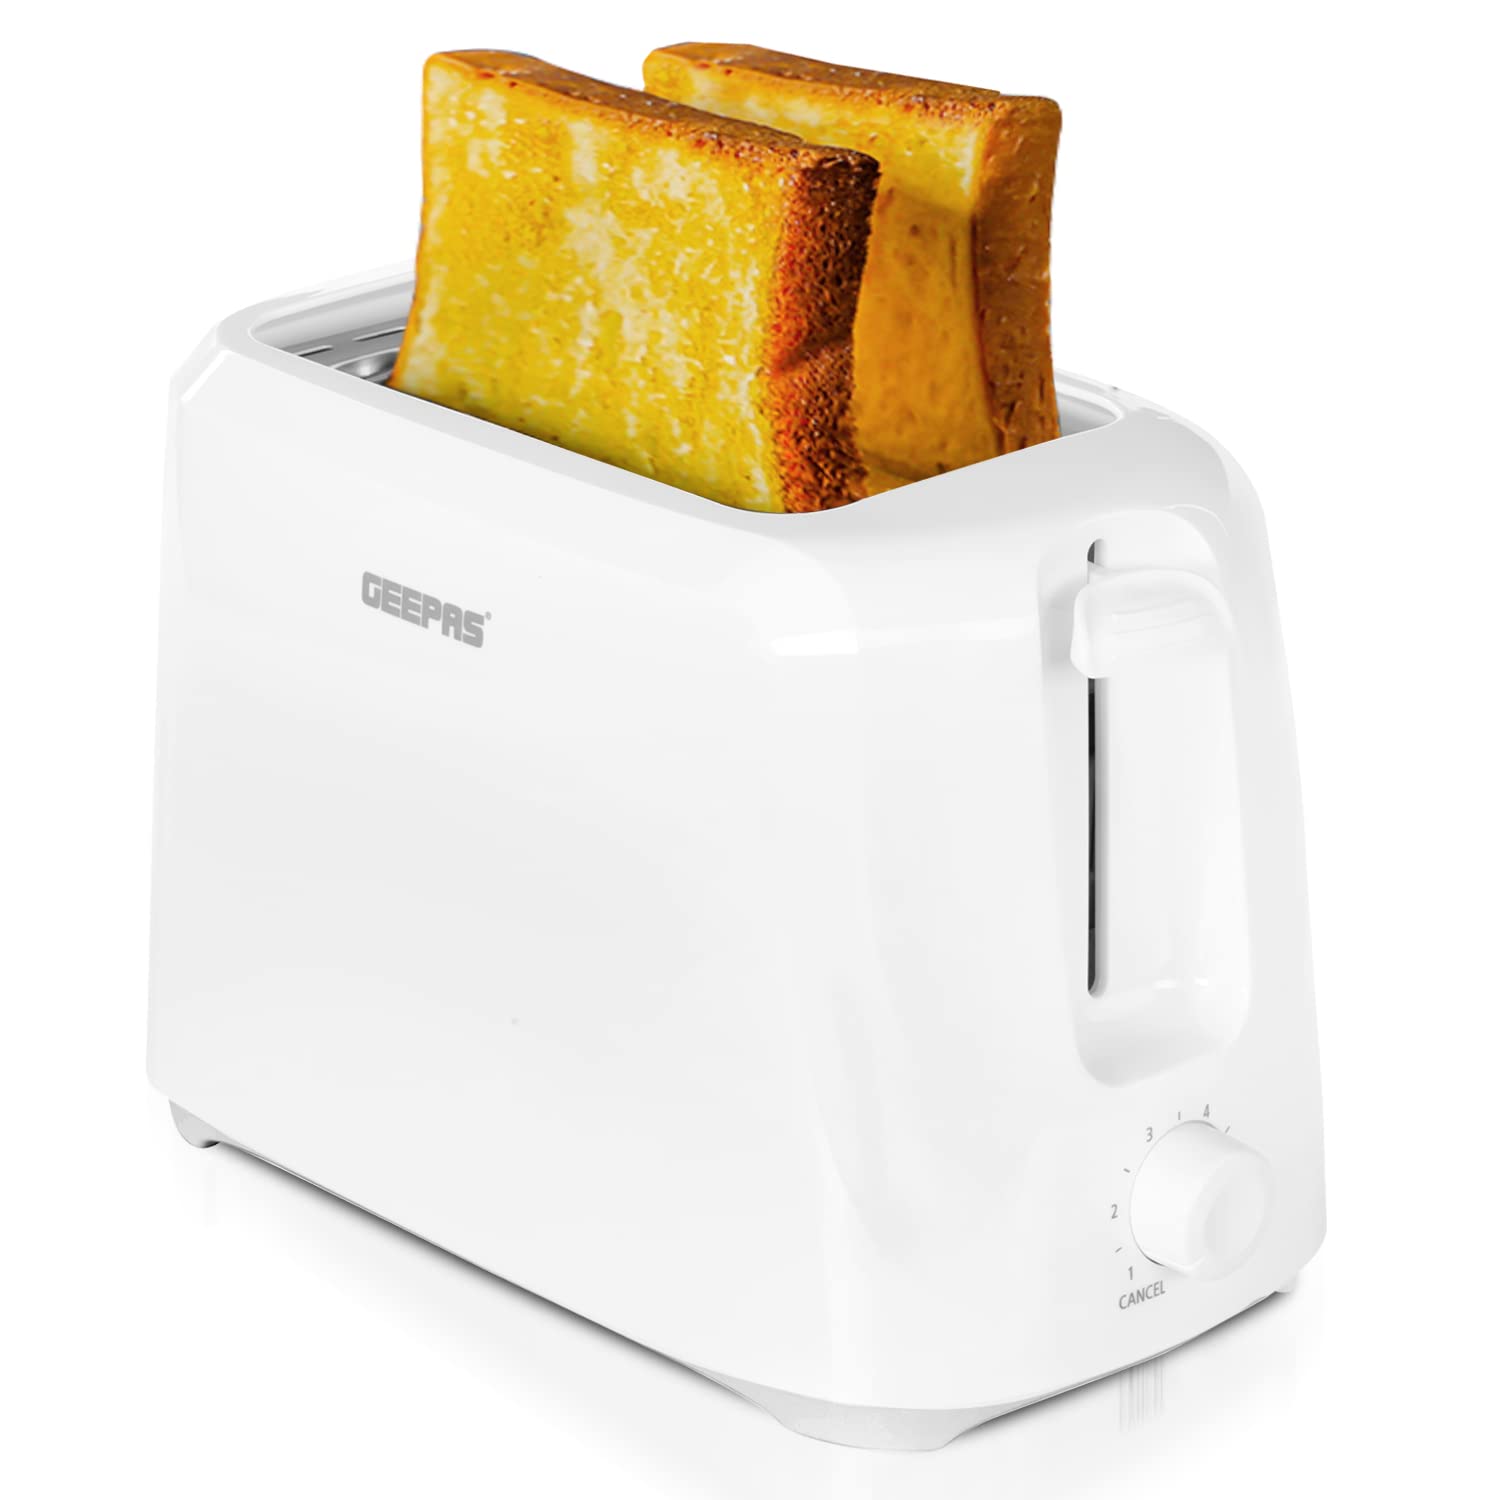 Geepas Bread Toaster, White, Gbt36515